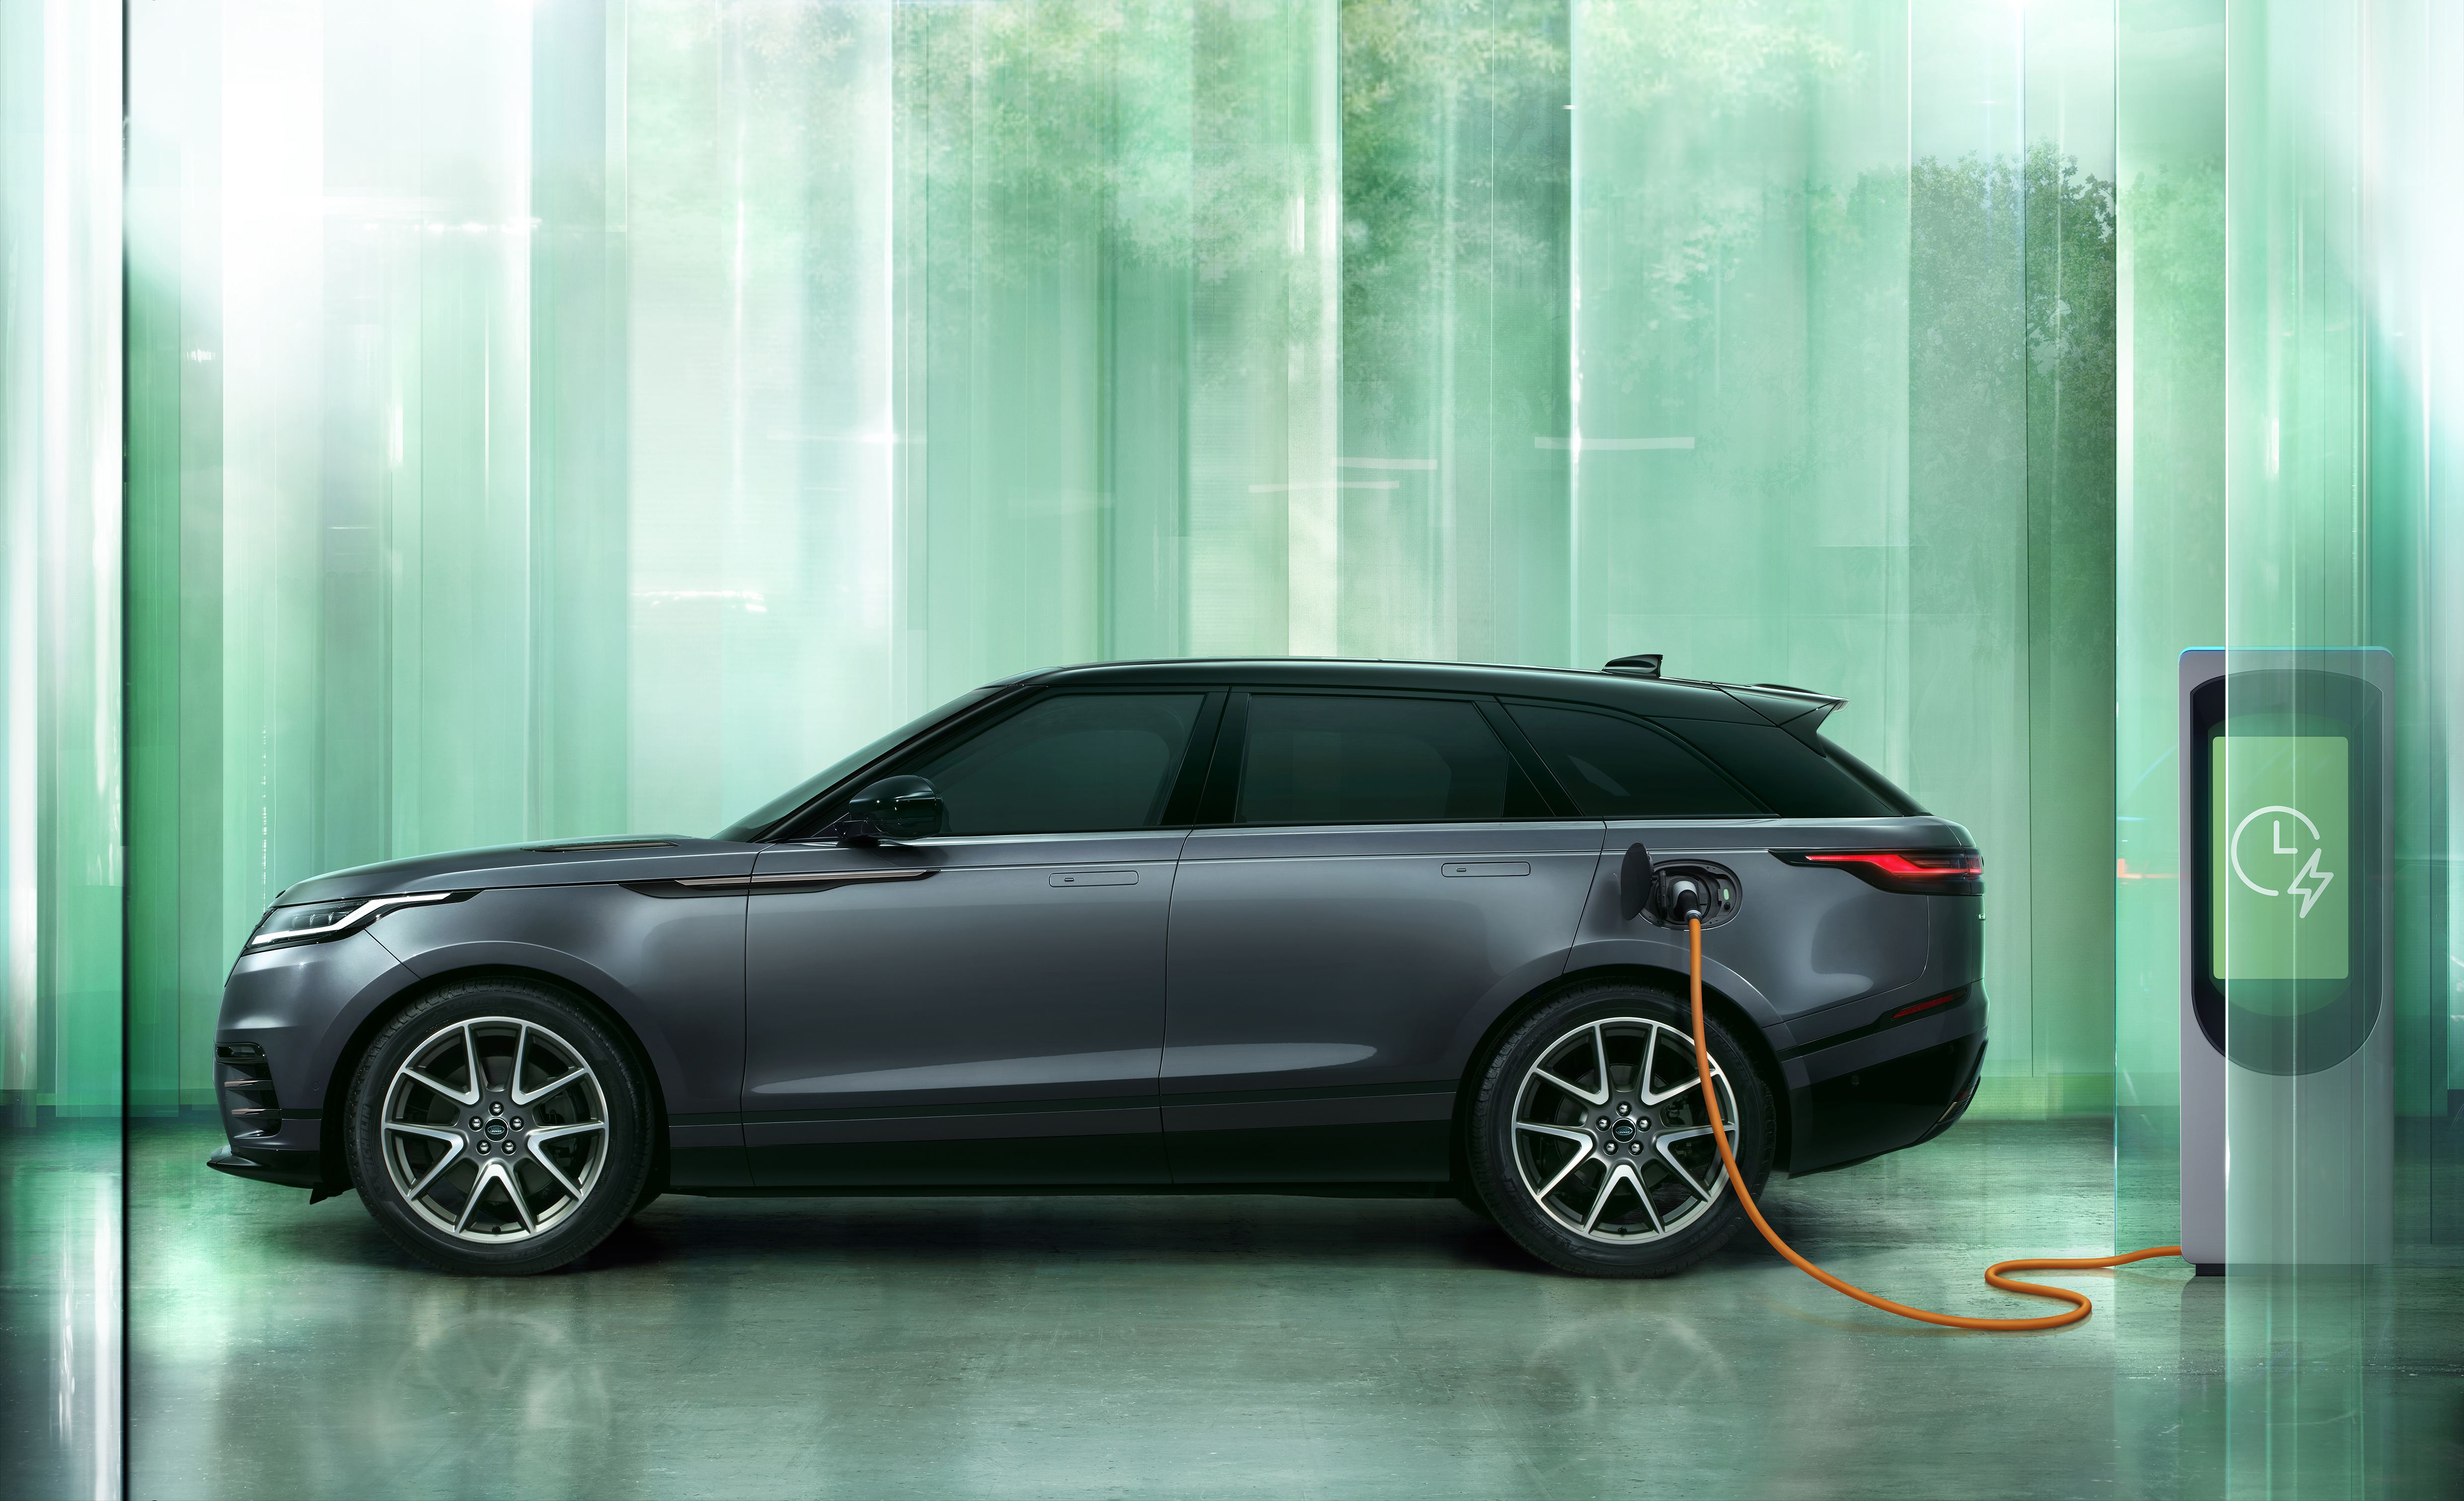 Vehicles Range Rover Velar HD Wallpaper | Background Image